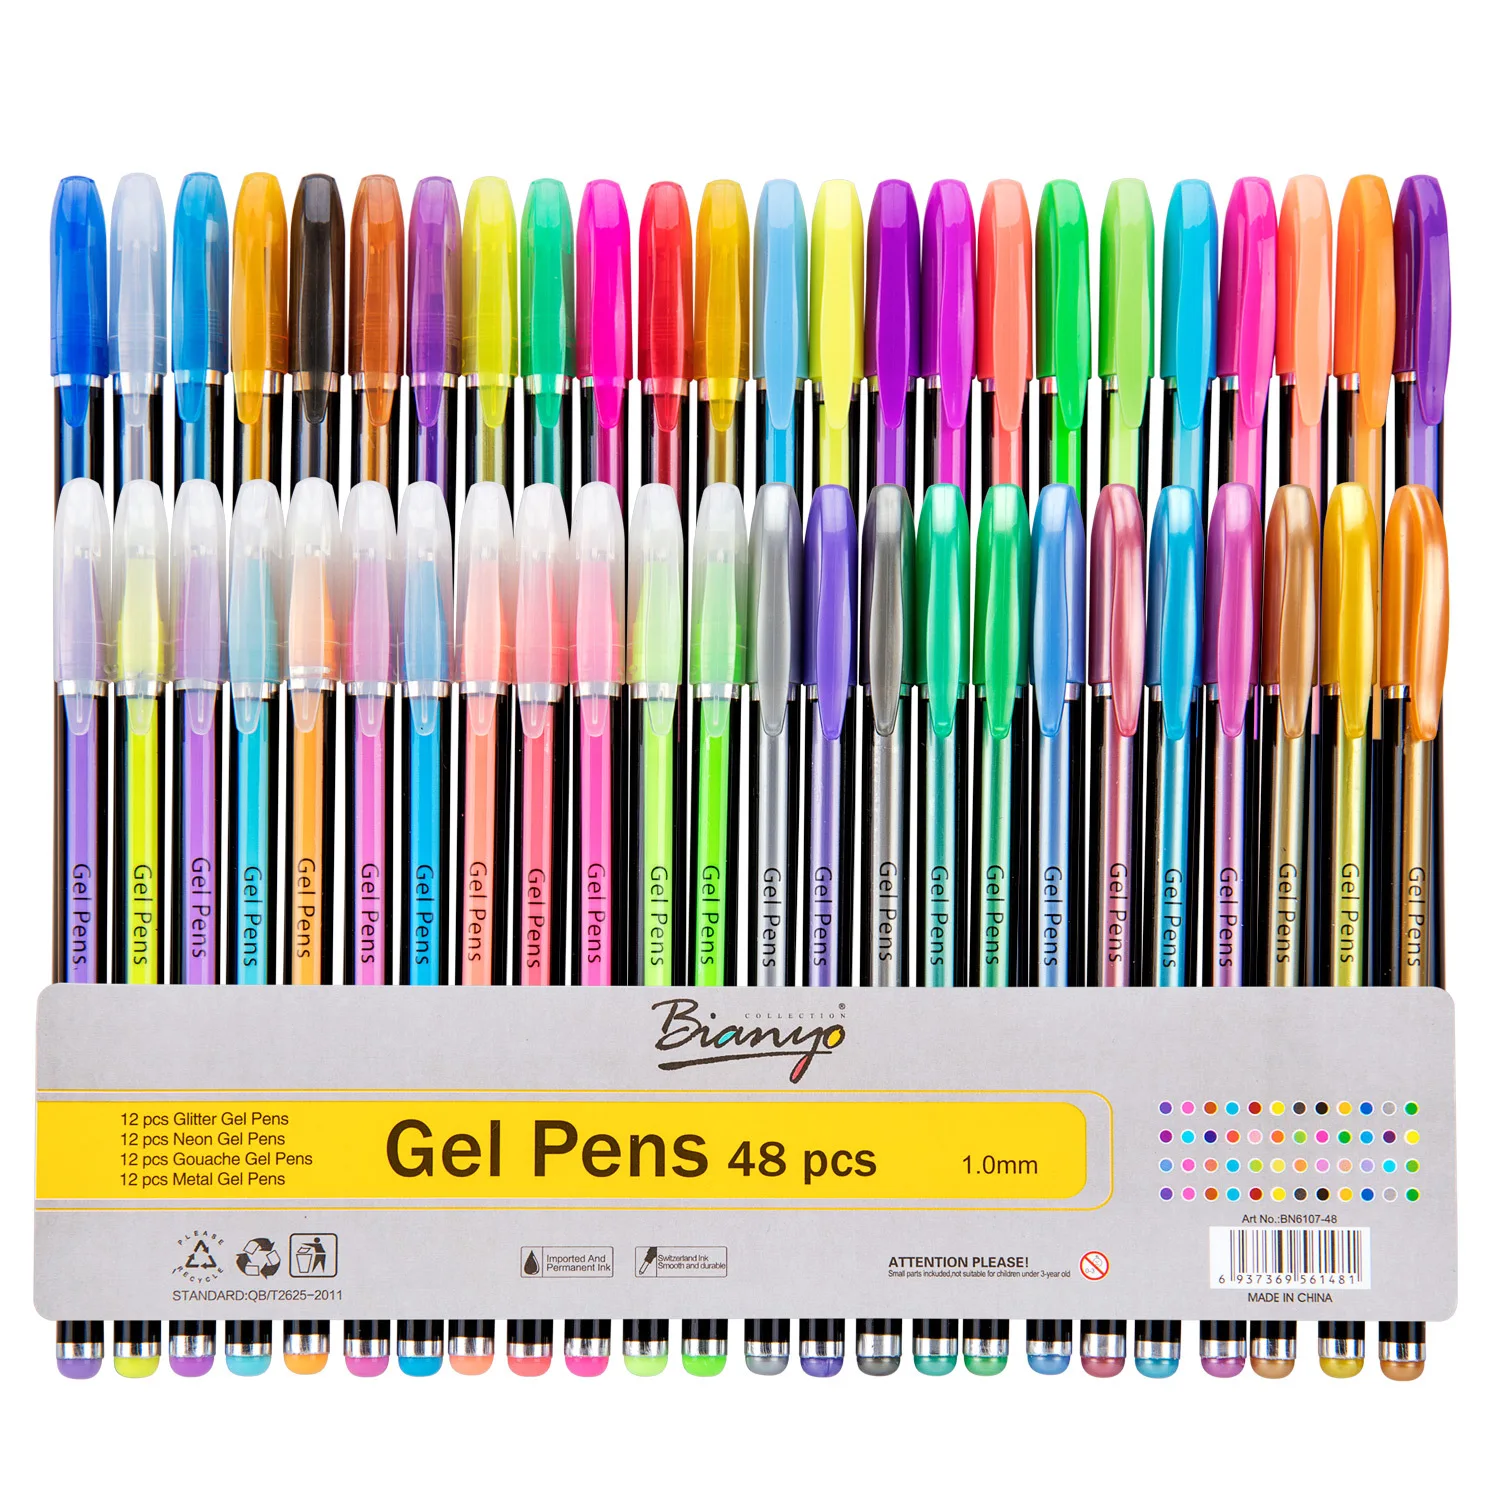 

1 Mm 48 Color Highlighter Gel Pens Marker for Crafting Doodling Drawing Kid and Adult